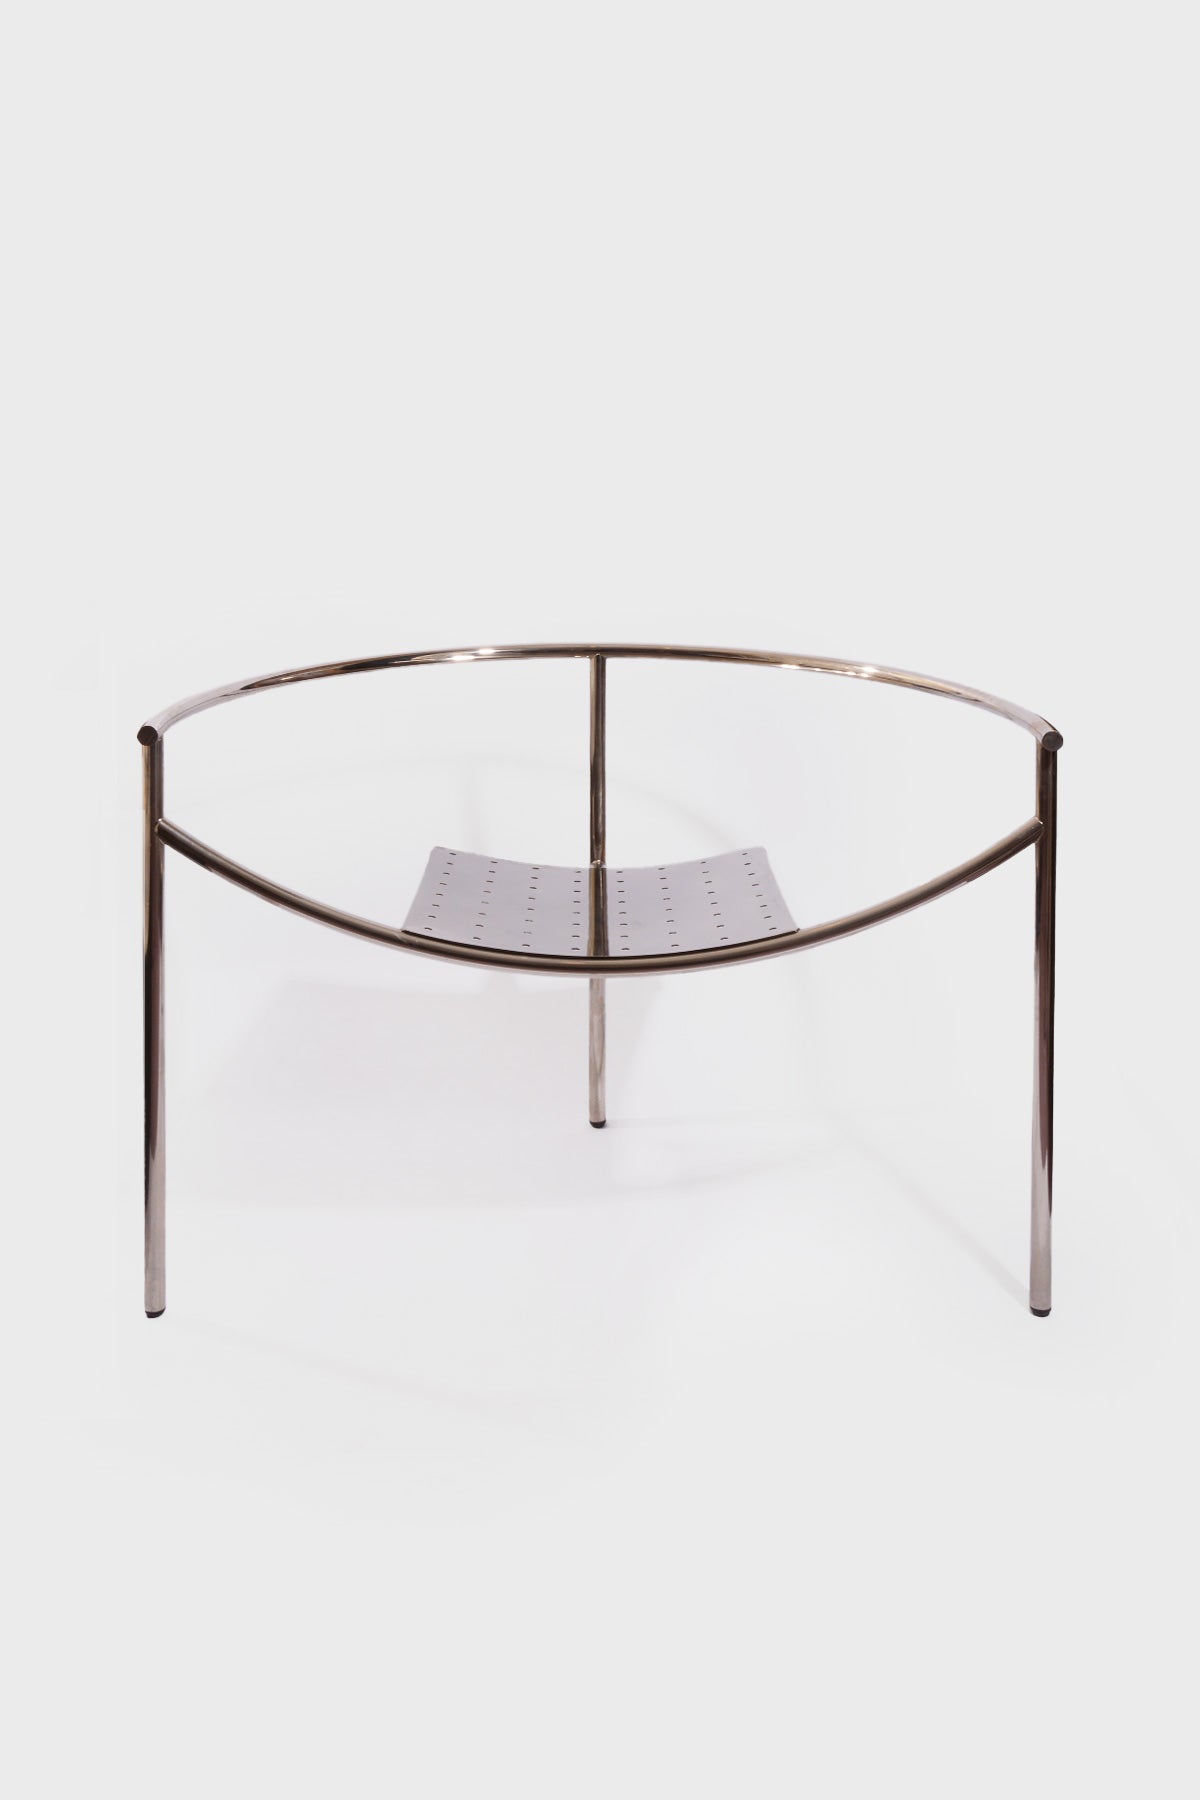 Philippe Starck 'Dr. Sonderbar' Chair for XO Design, 1983 For Sale